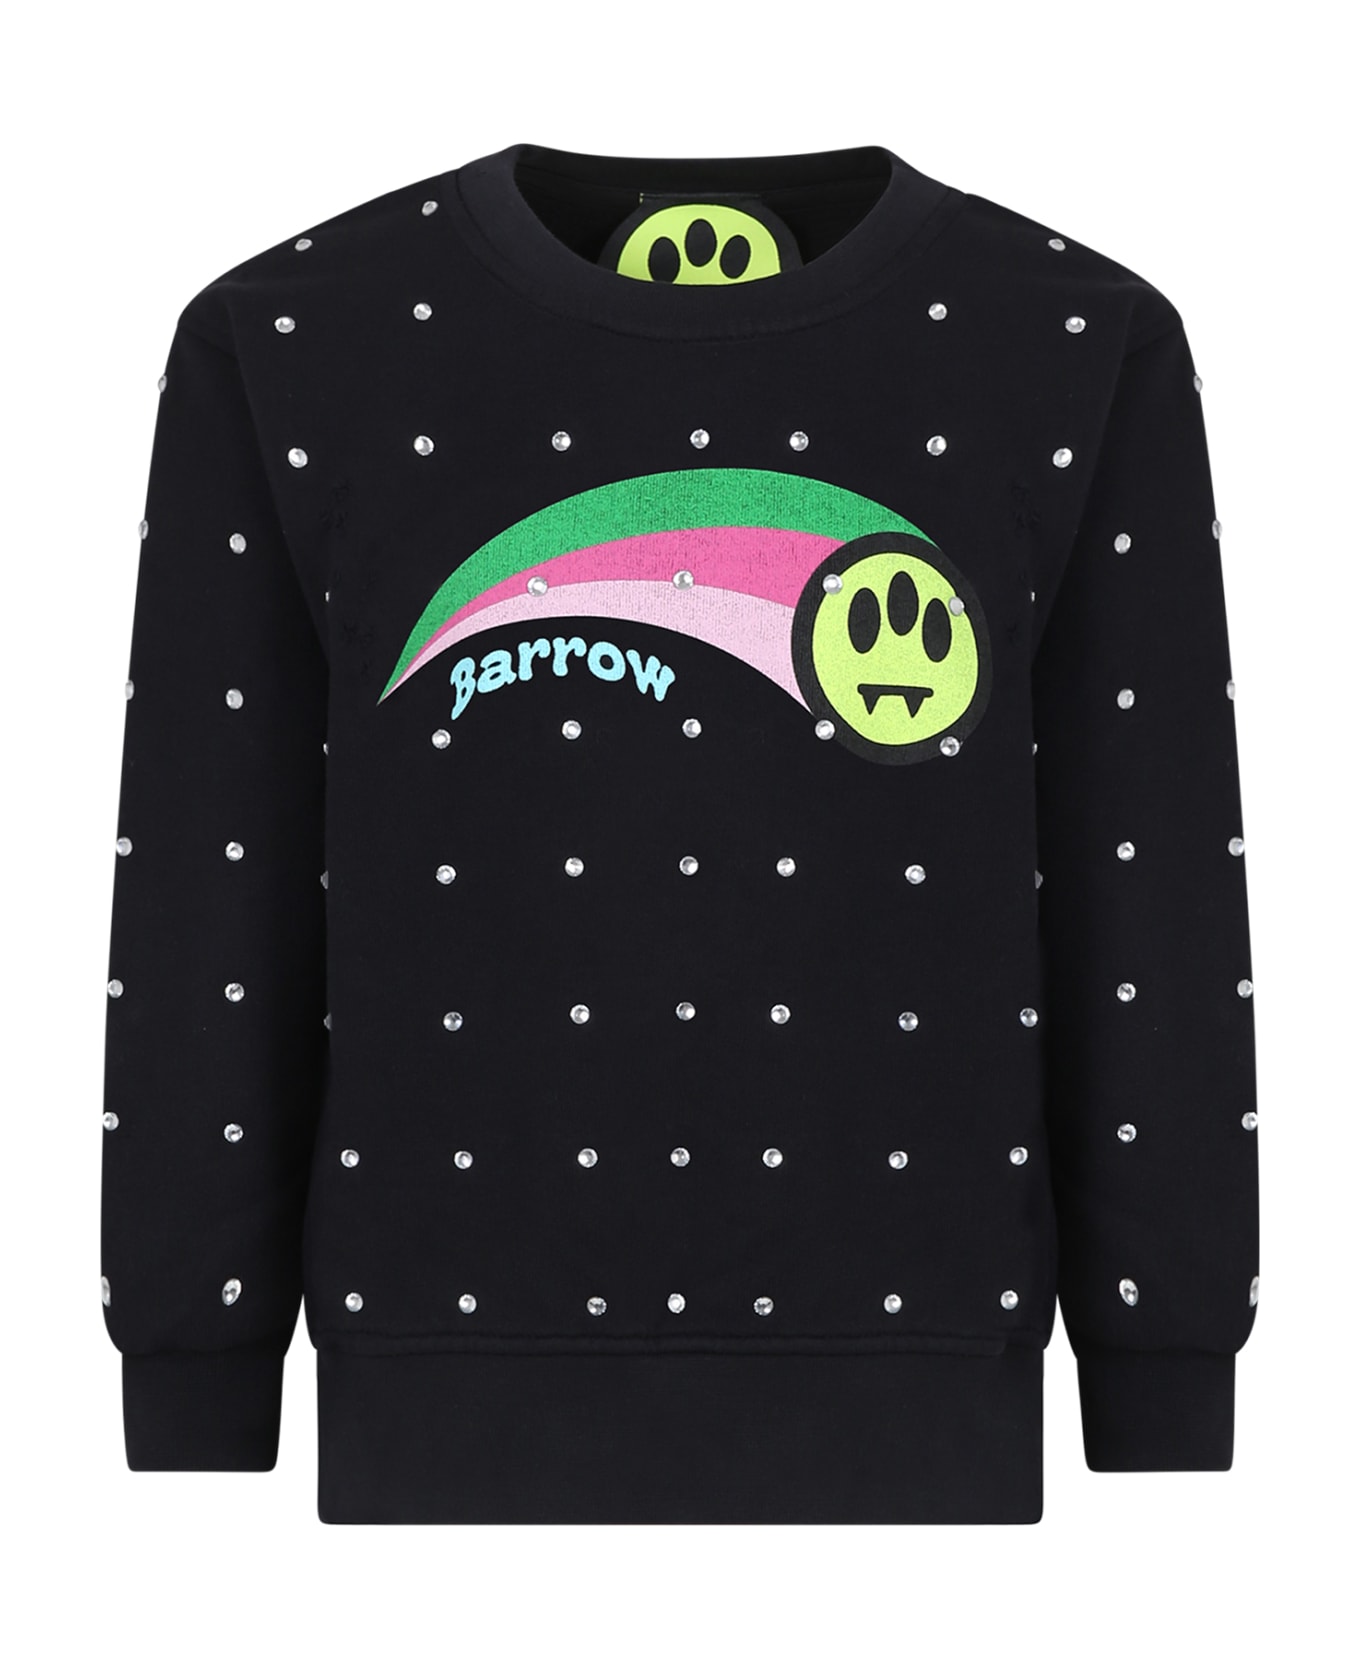 Barrow Black Sweatshirt For Girl With Smiley - Black